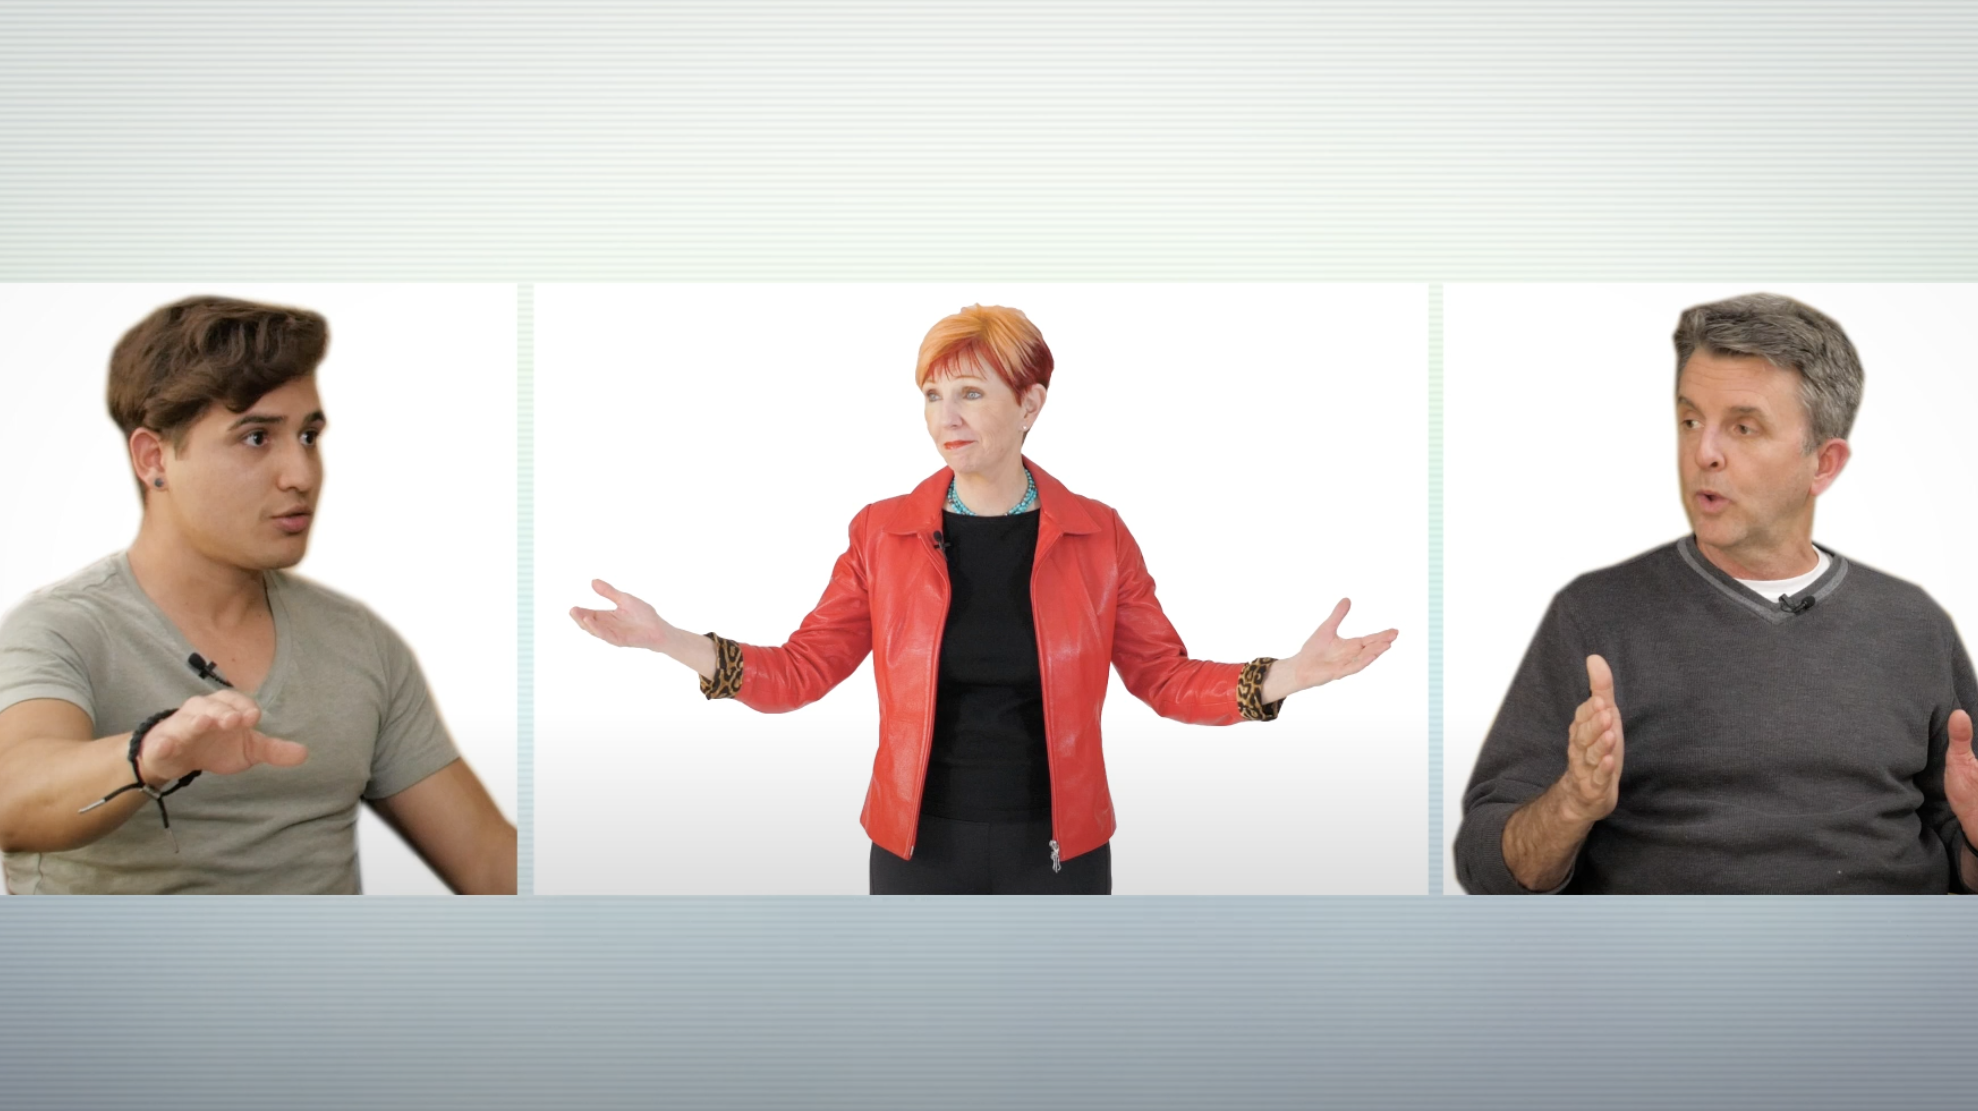 VIDEO: Gestures, a key leadership skill